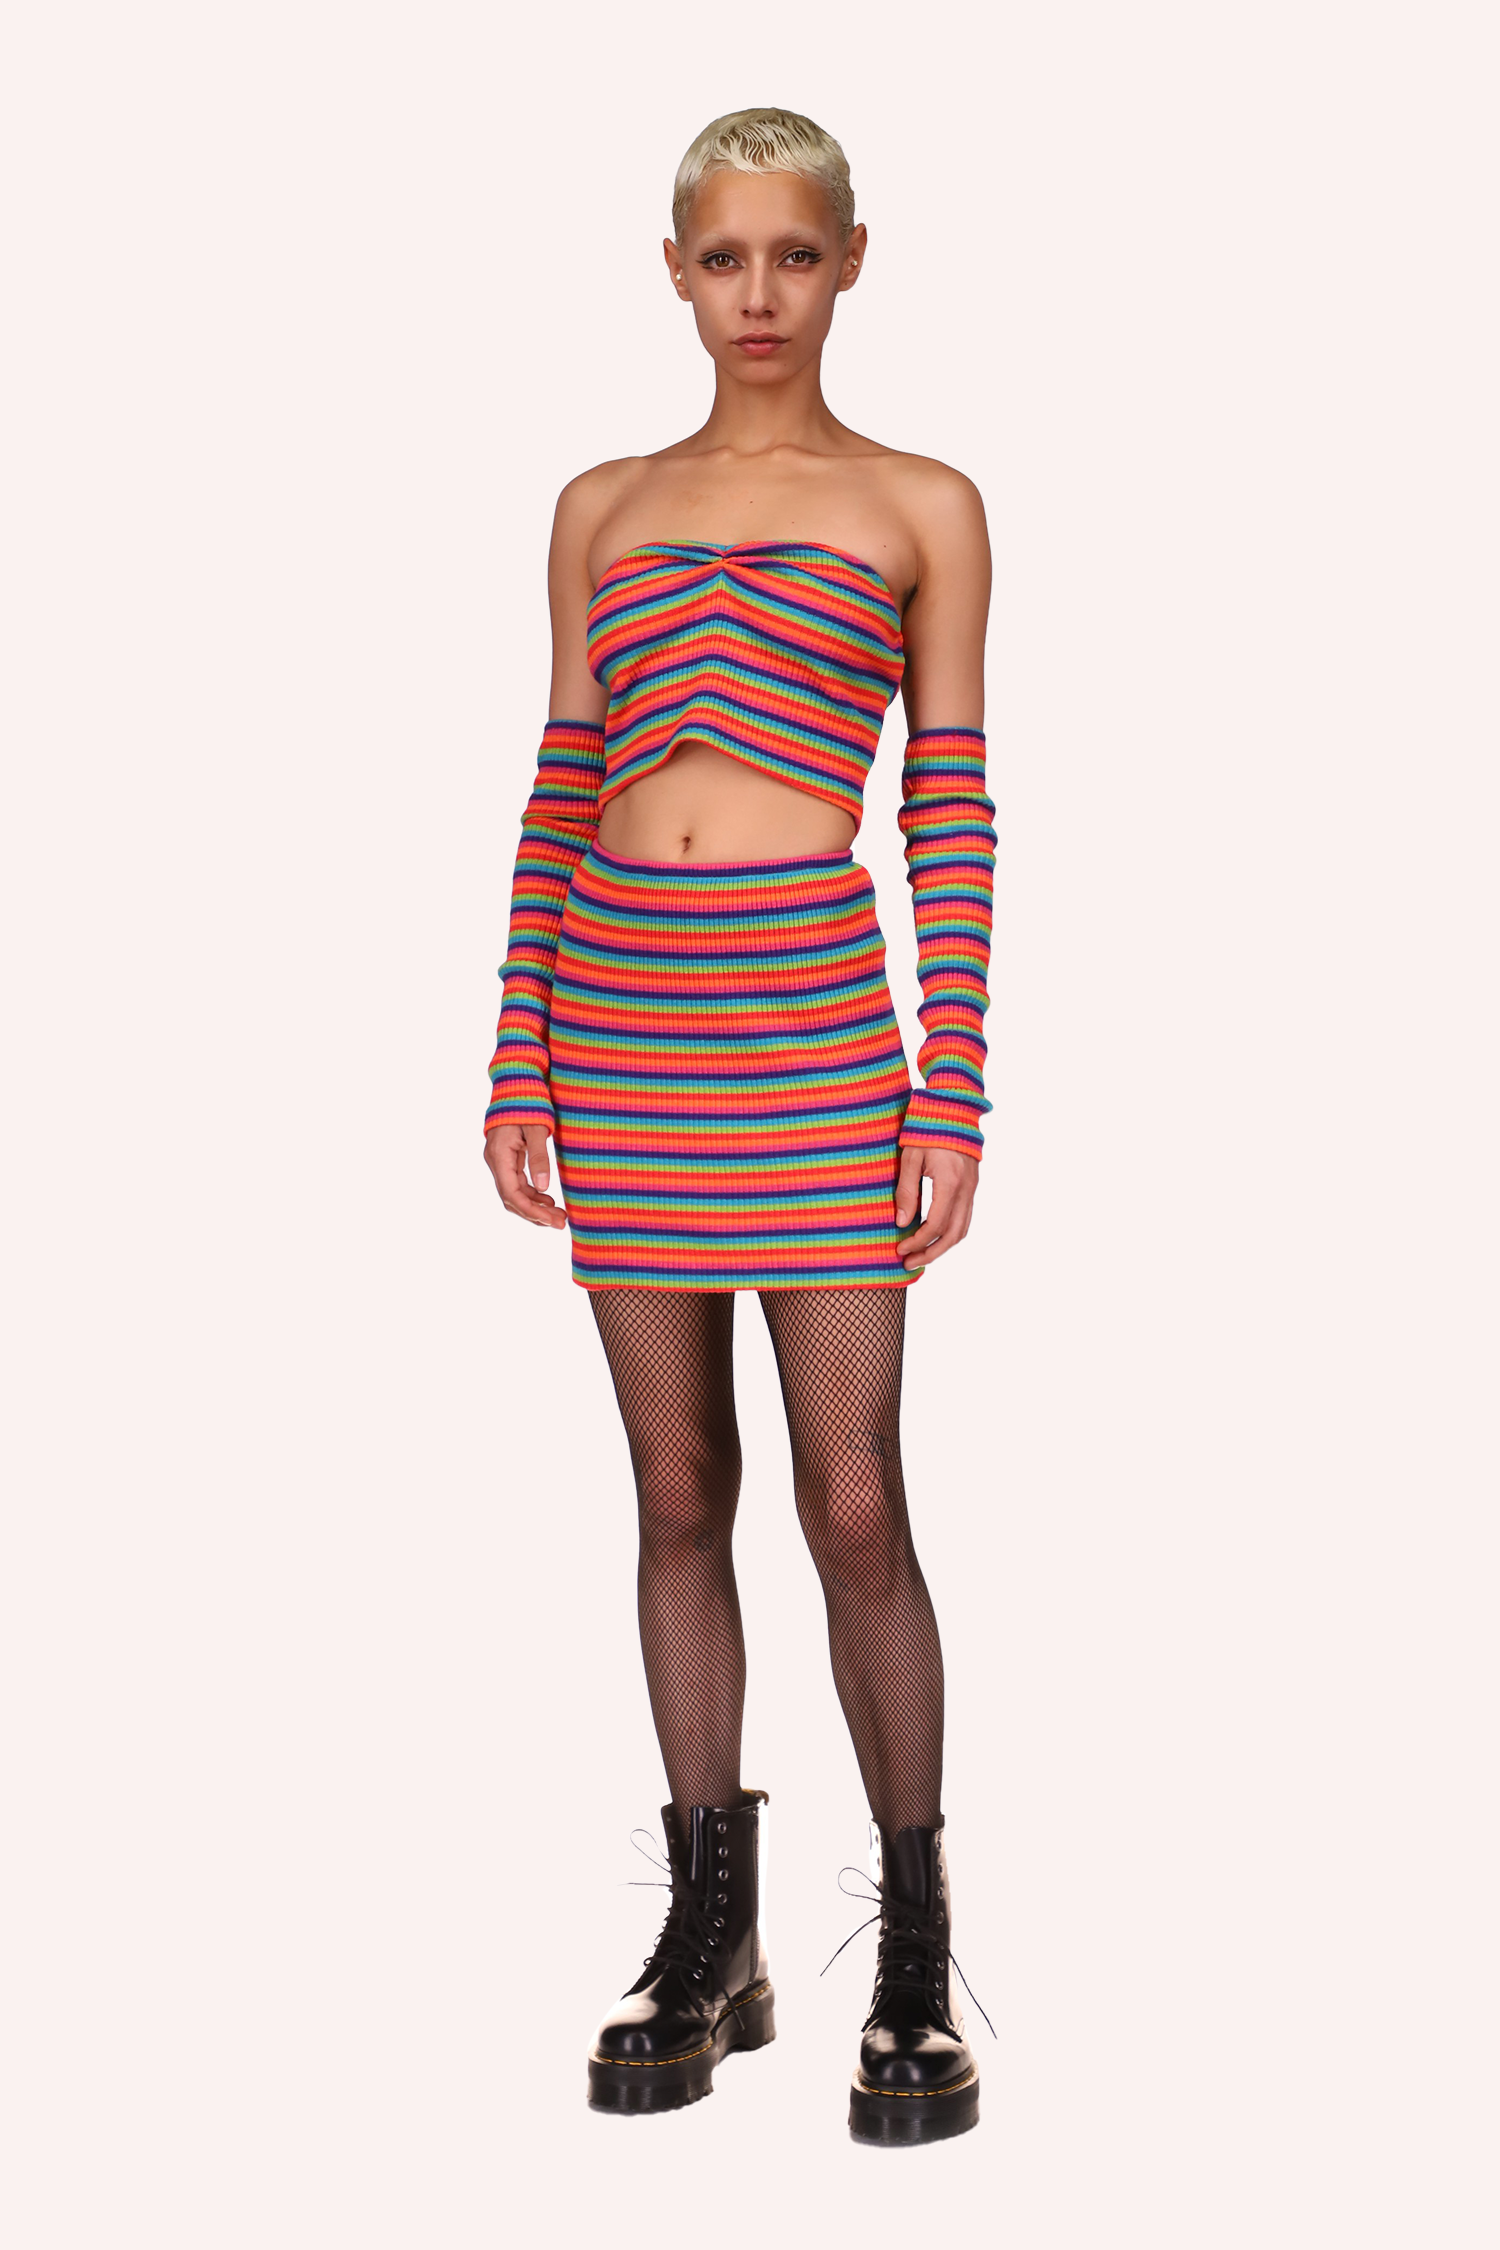 Rainbow Stripe Tube Top match with Rainbow Stripe Mini Skirt Rainbow